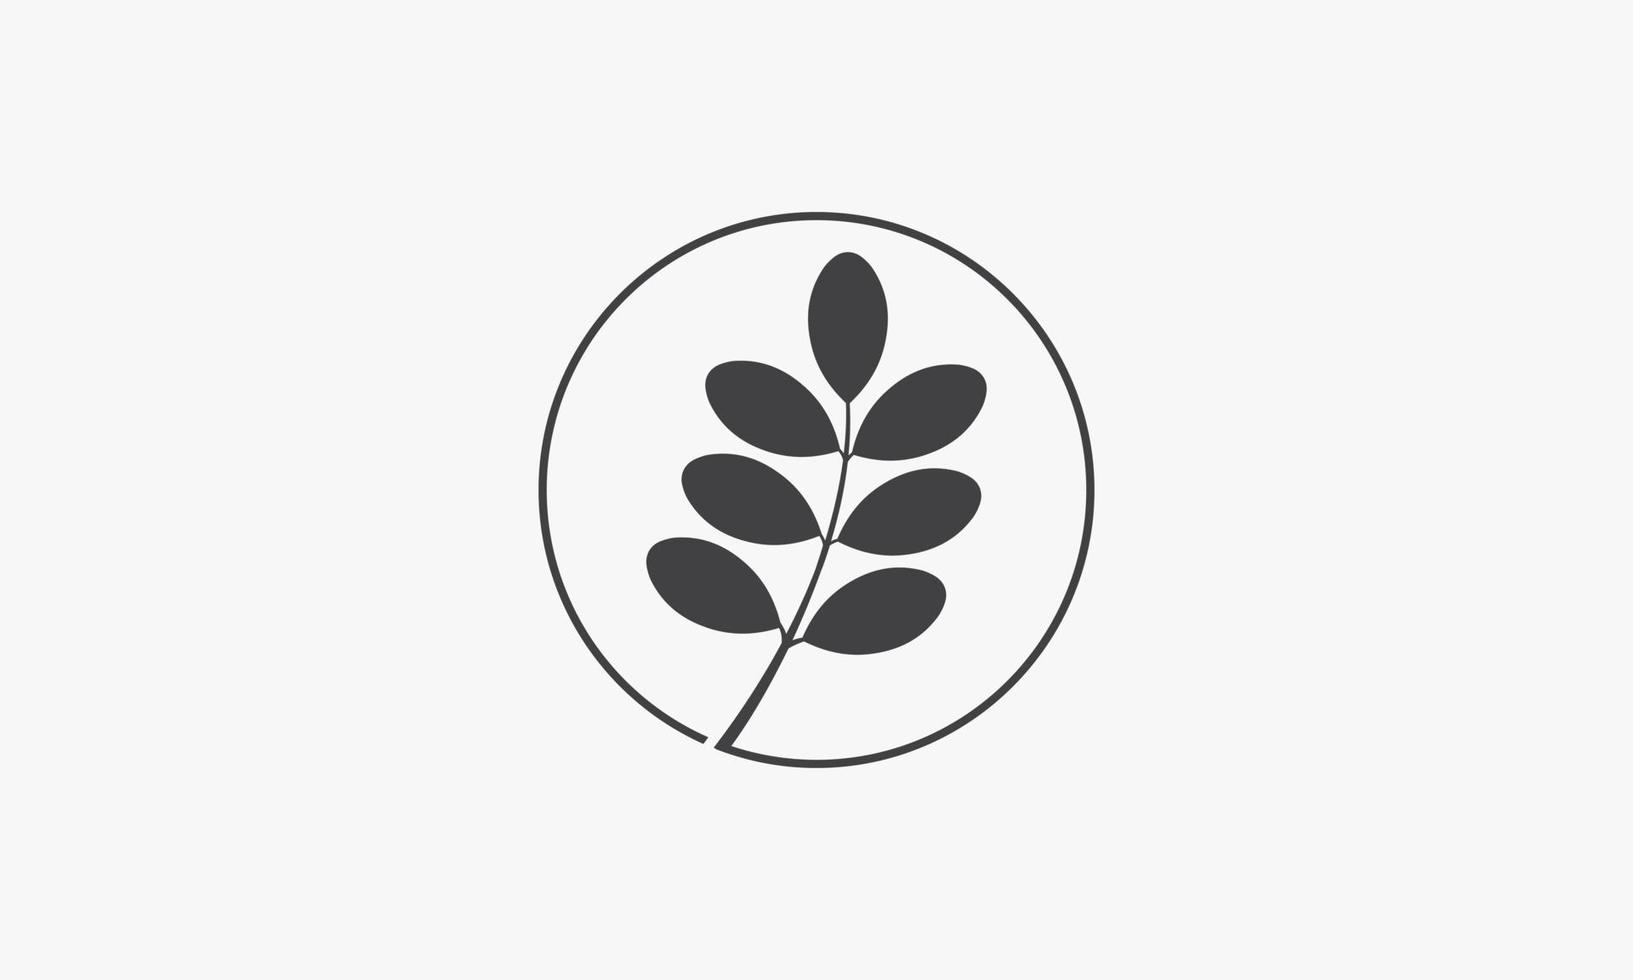 circle with leaf moringa vector illustration on white background. creative icon.